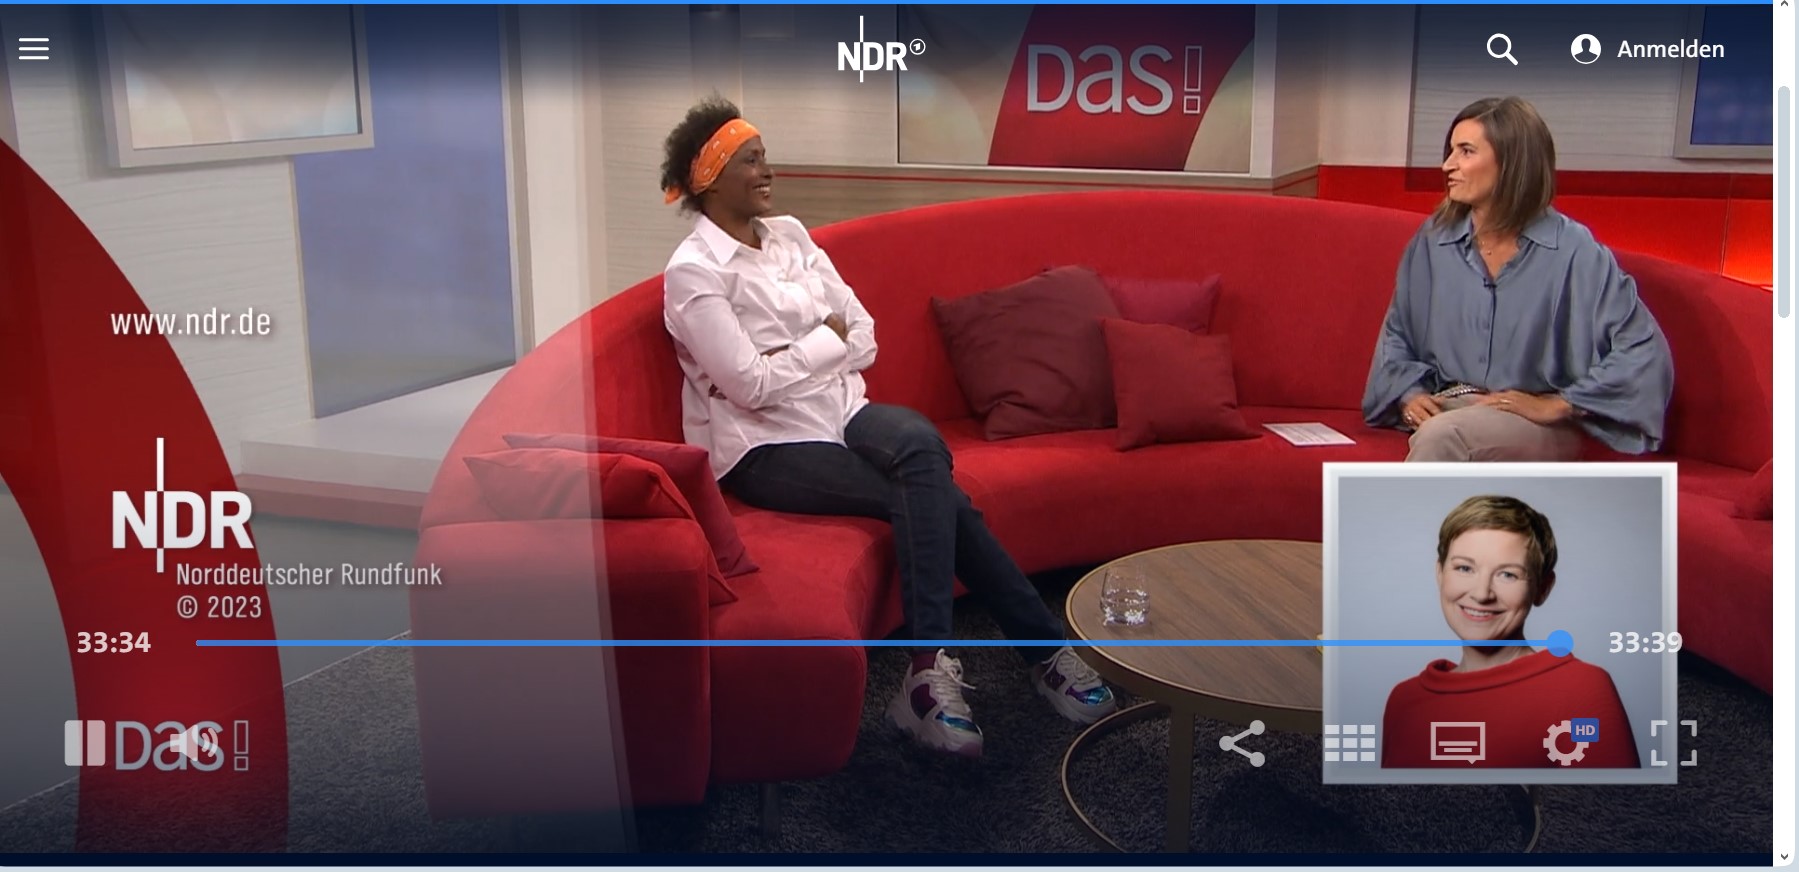 KDB auf dem Roten Sofa des NDR